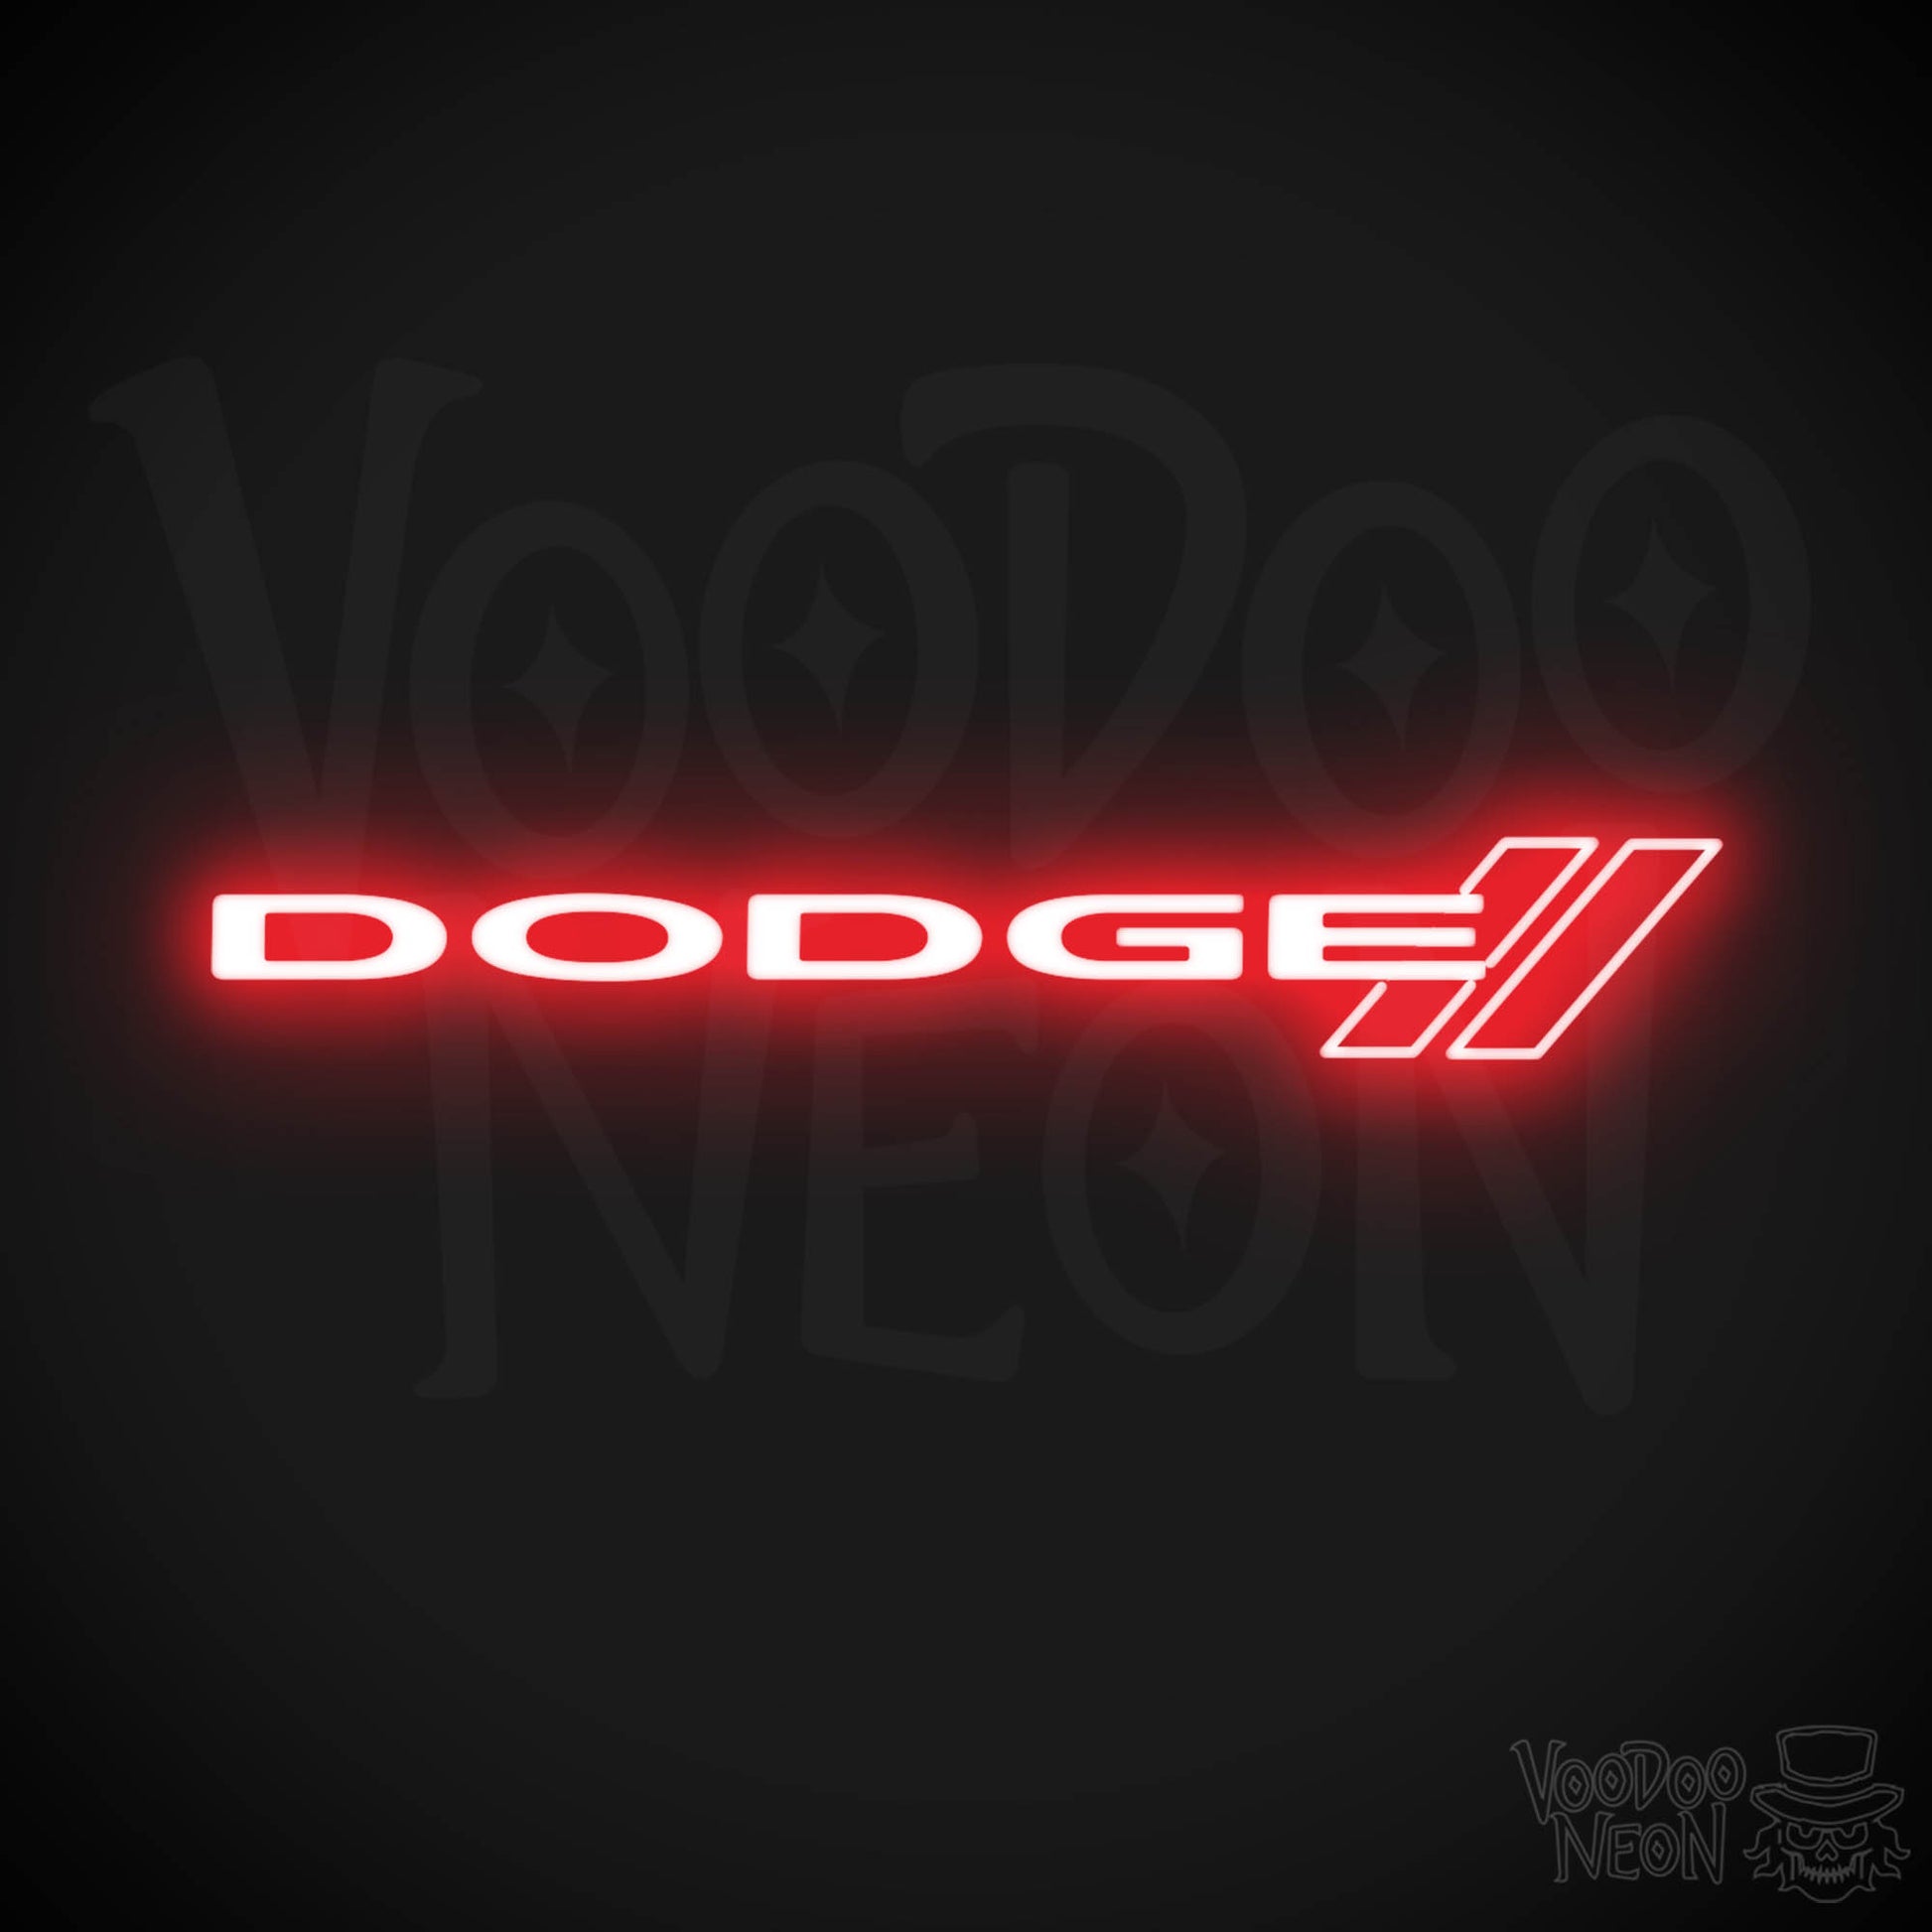 Dodge Neon Sign - Dodge Sign - Dodge Decor - Wall Art - Color Red